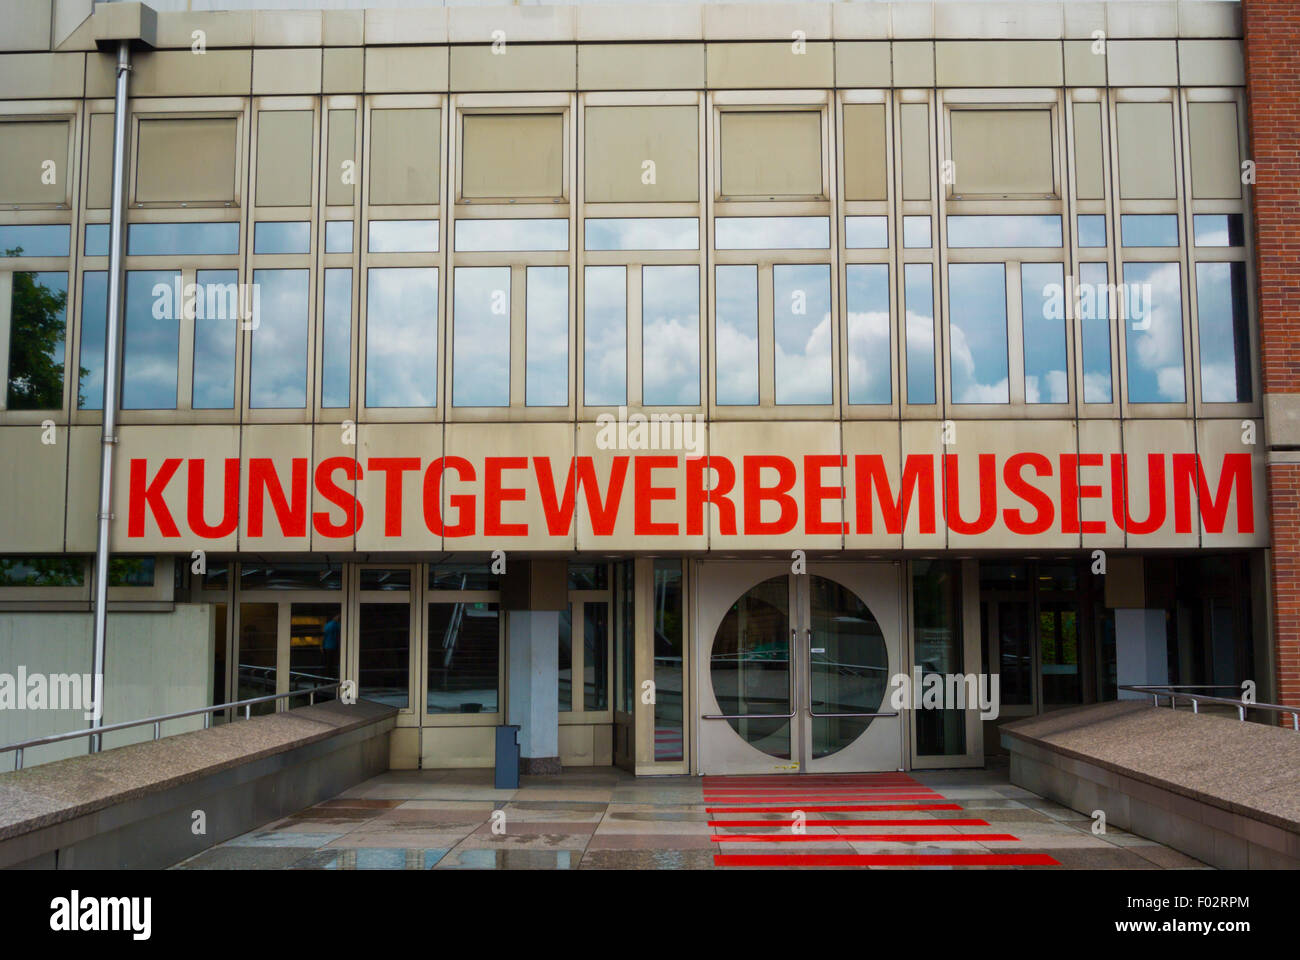 Kunstgewerbemuseum, Museo de Artes Decorativas, Matthäikirchplatz, Mitte,  Berlin, Alemania Fotografía de stock - Alamy